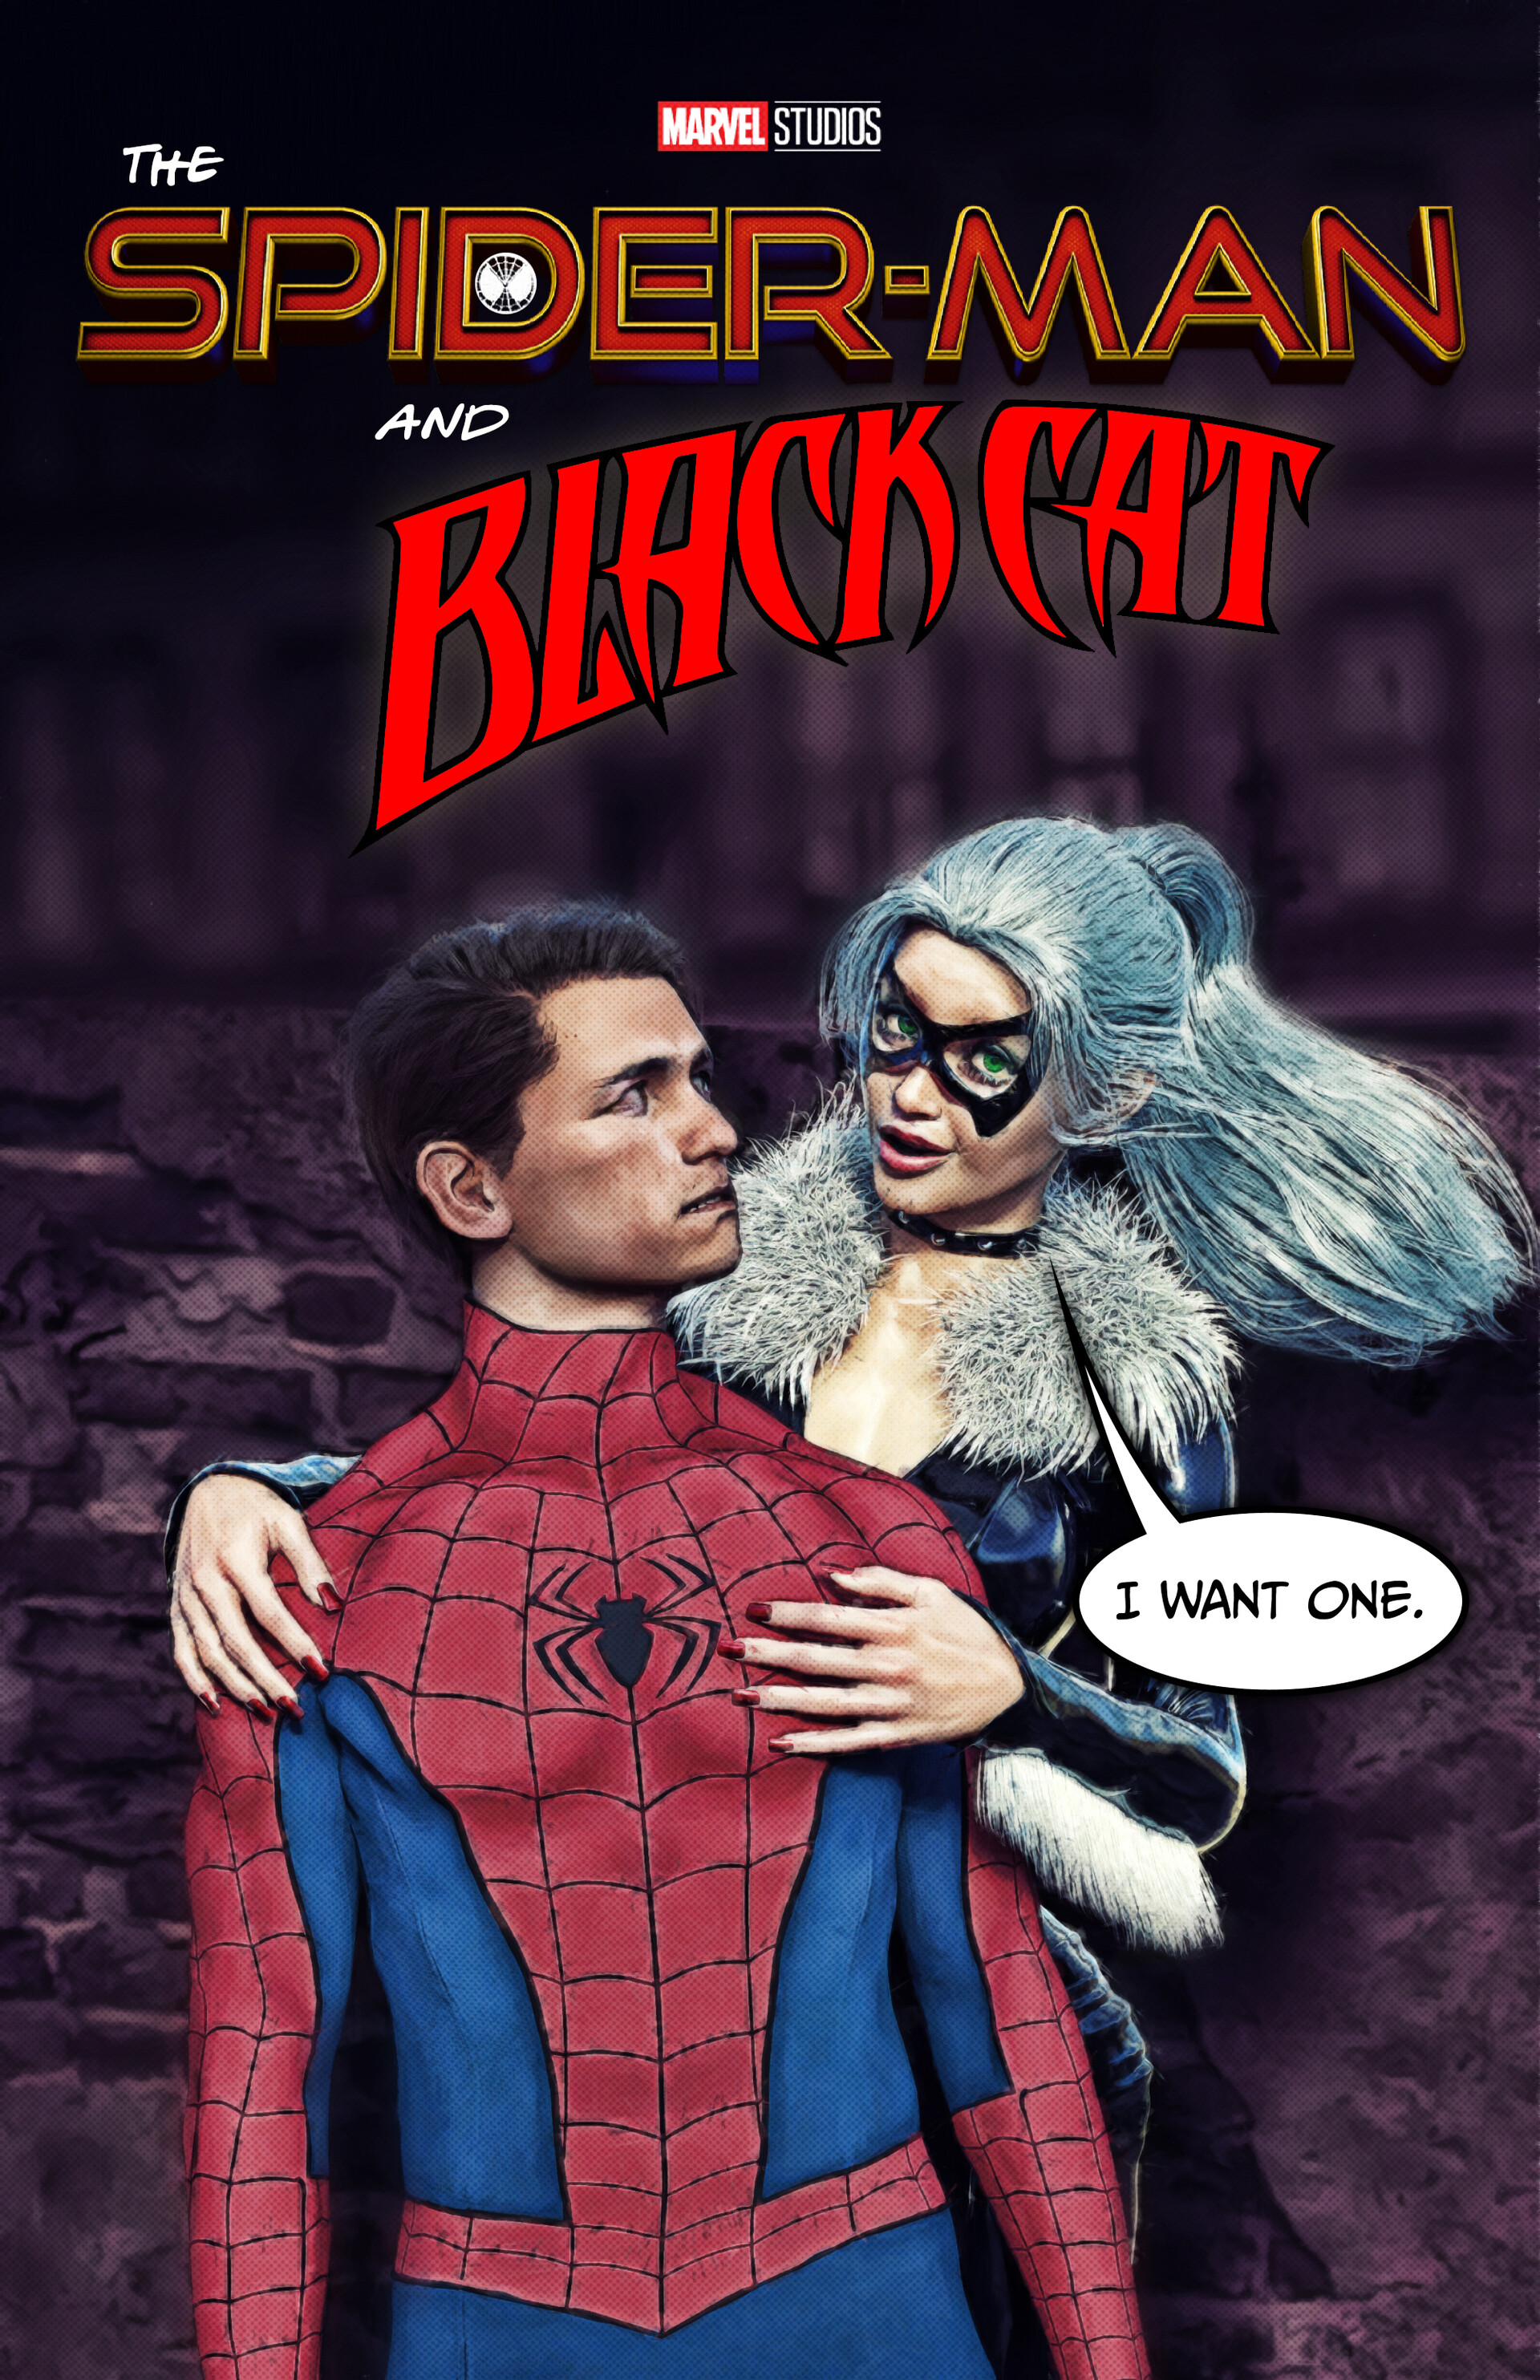 ArtStation - The Spiderman and BlackCat